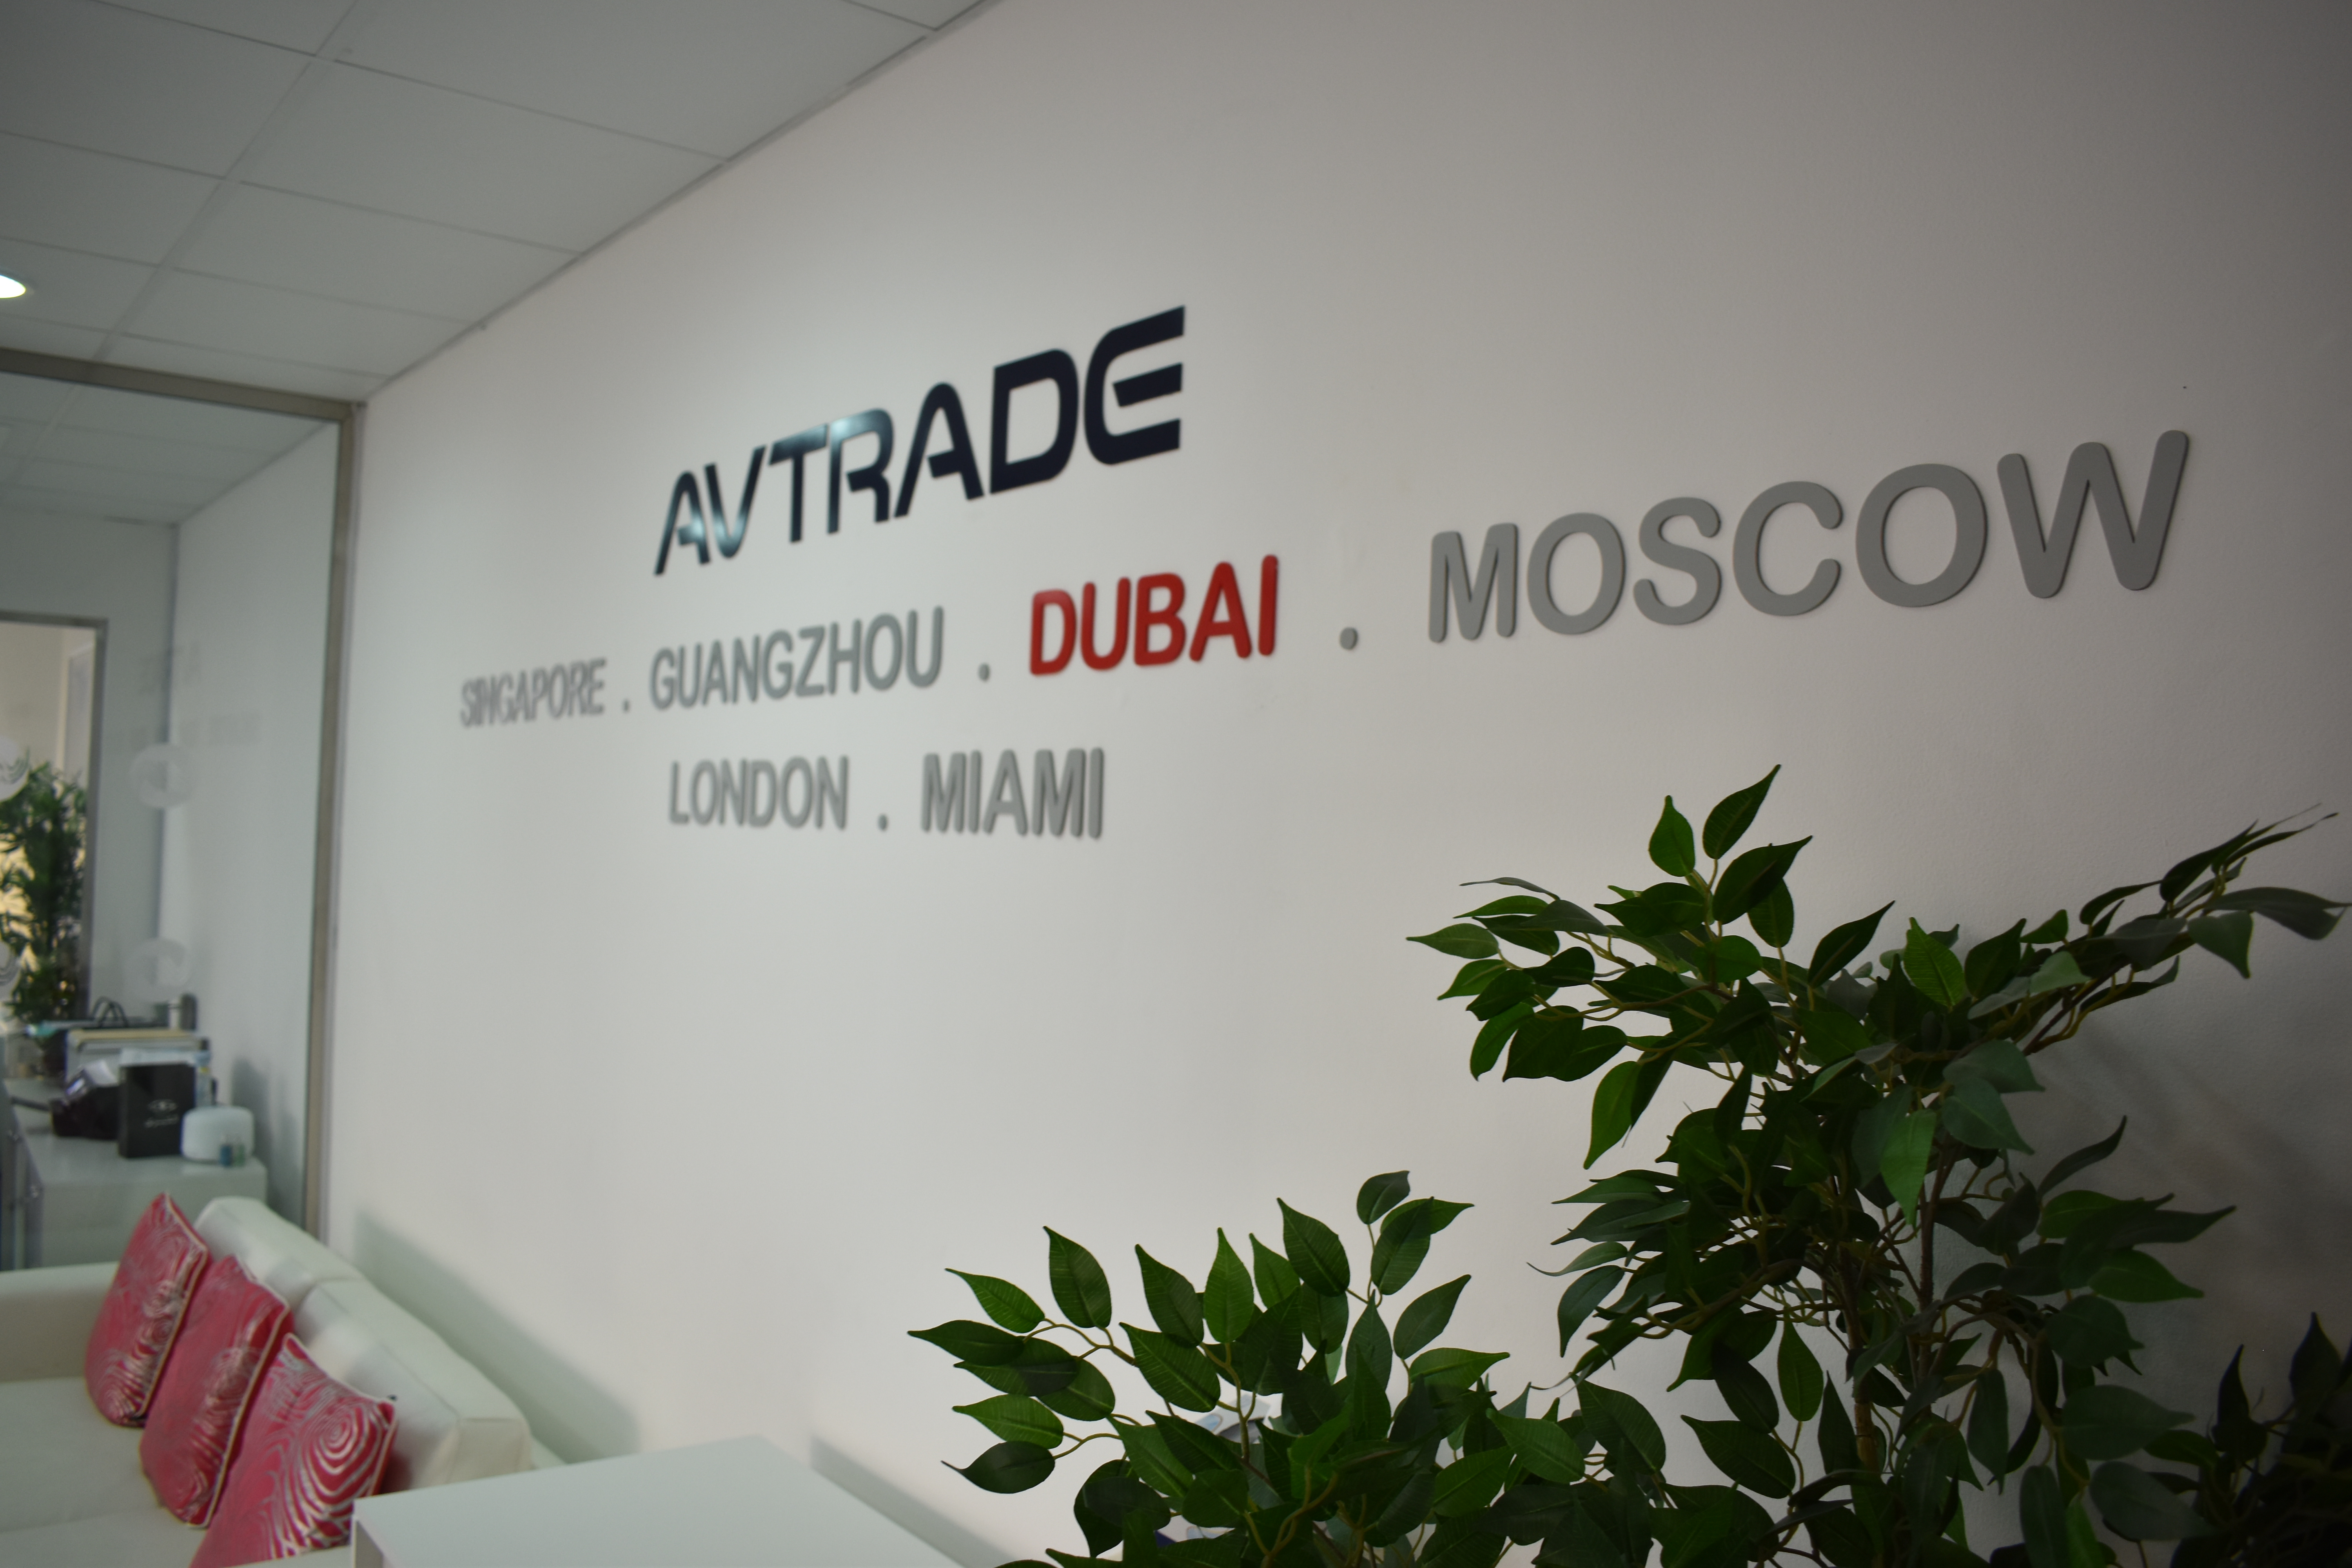 Avtrade Dubai U.A.E. Aviation Component Support Services